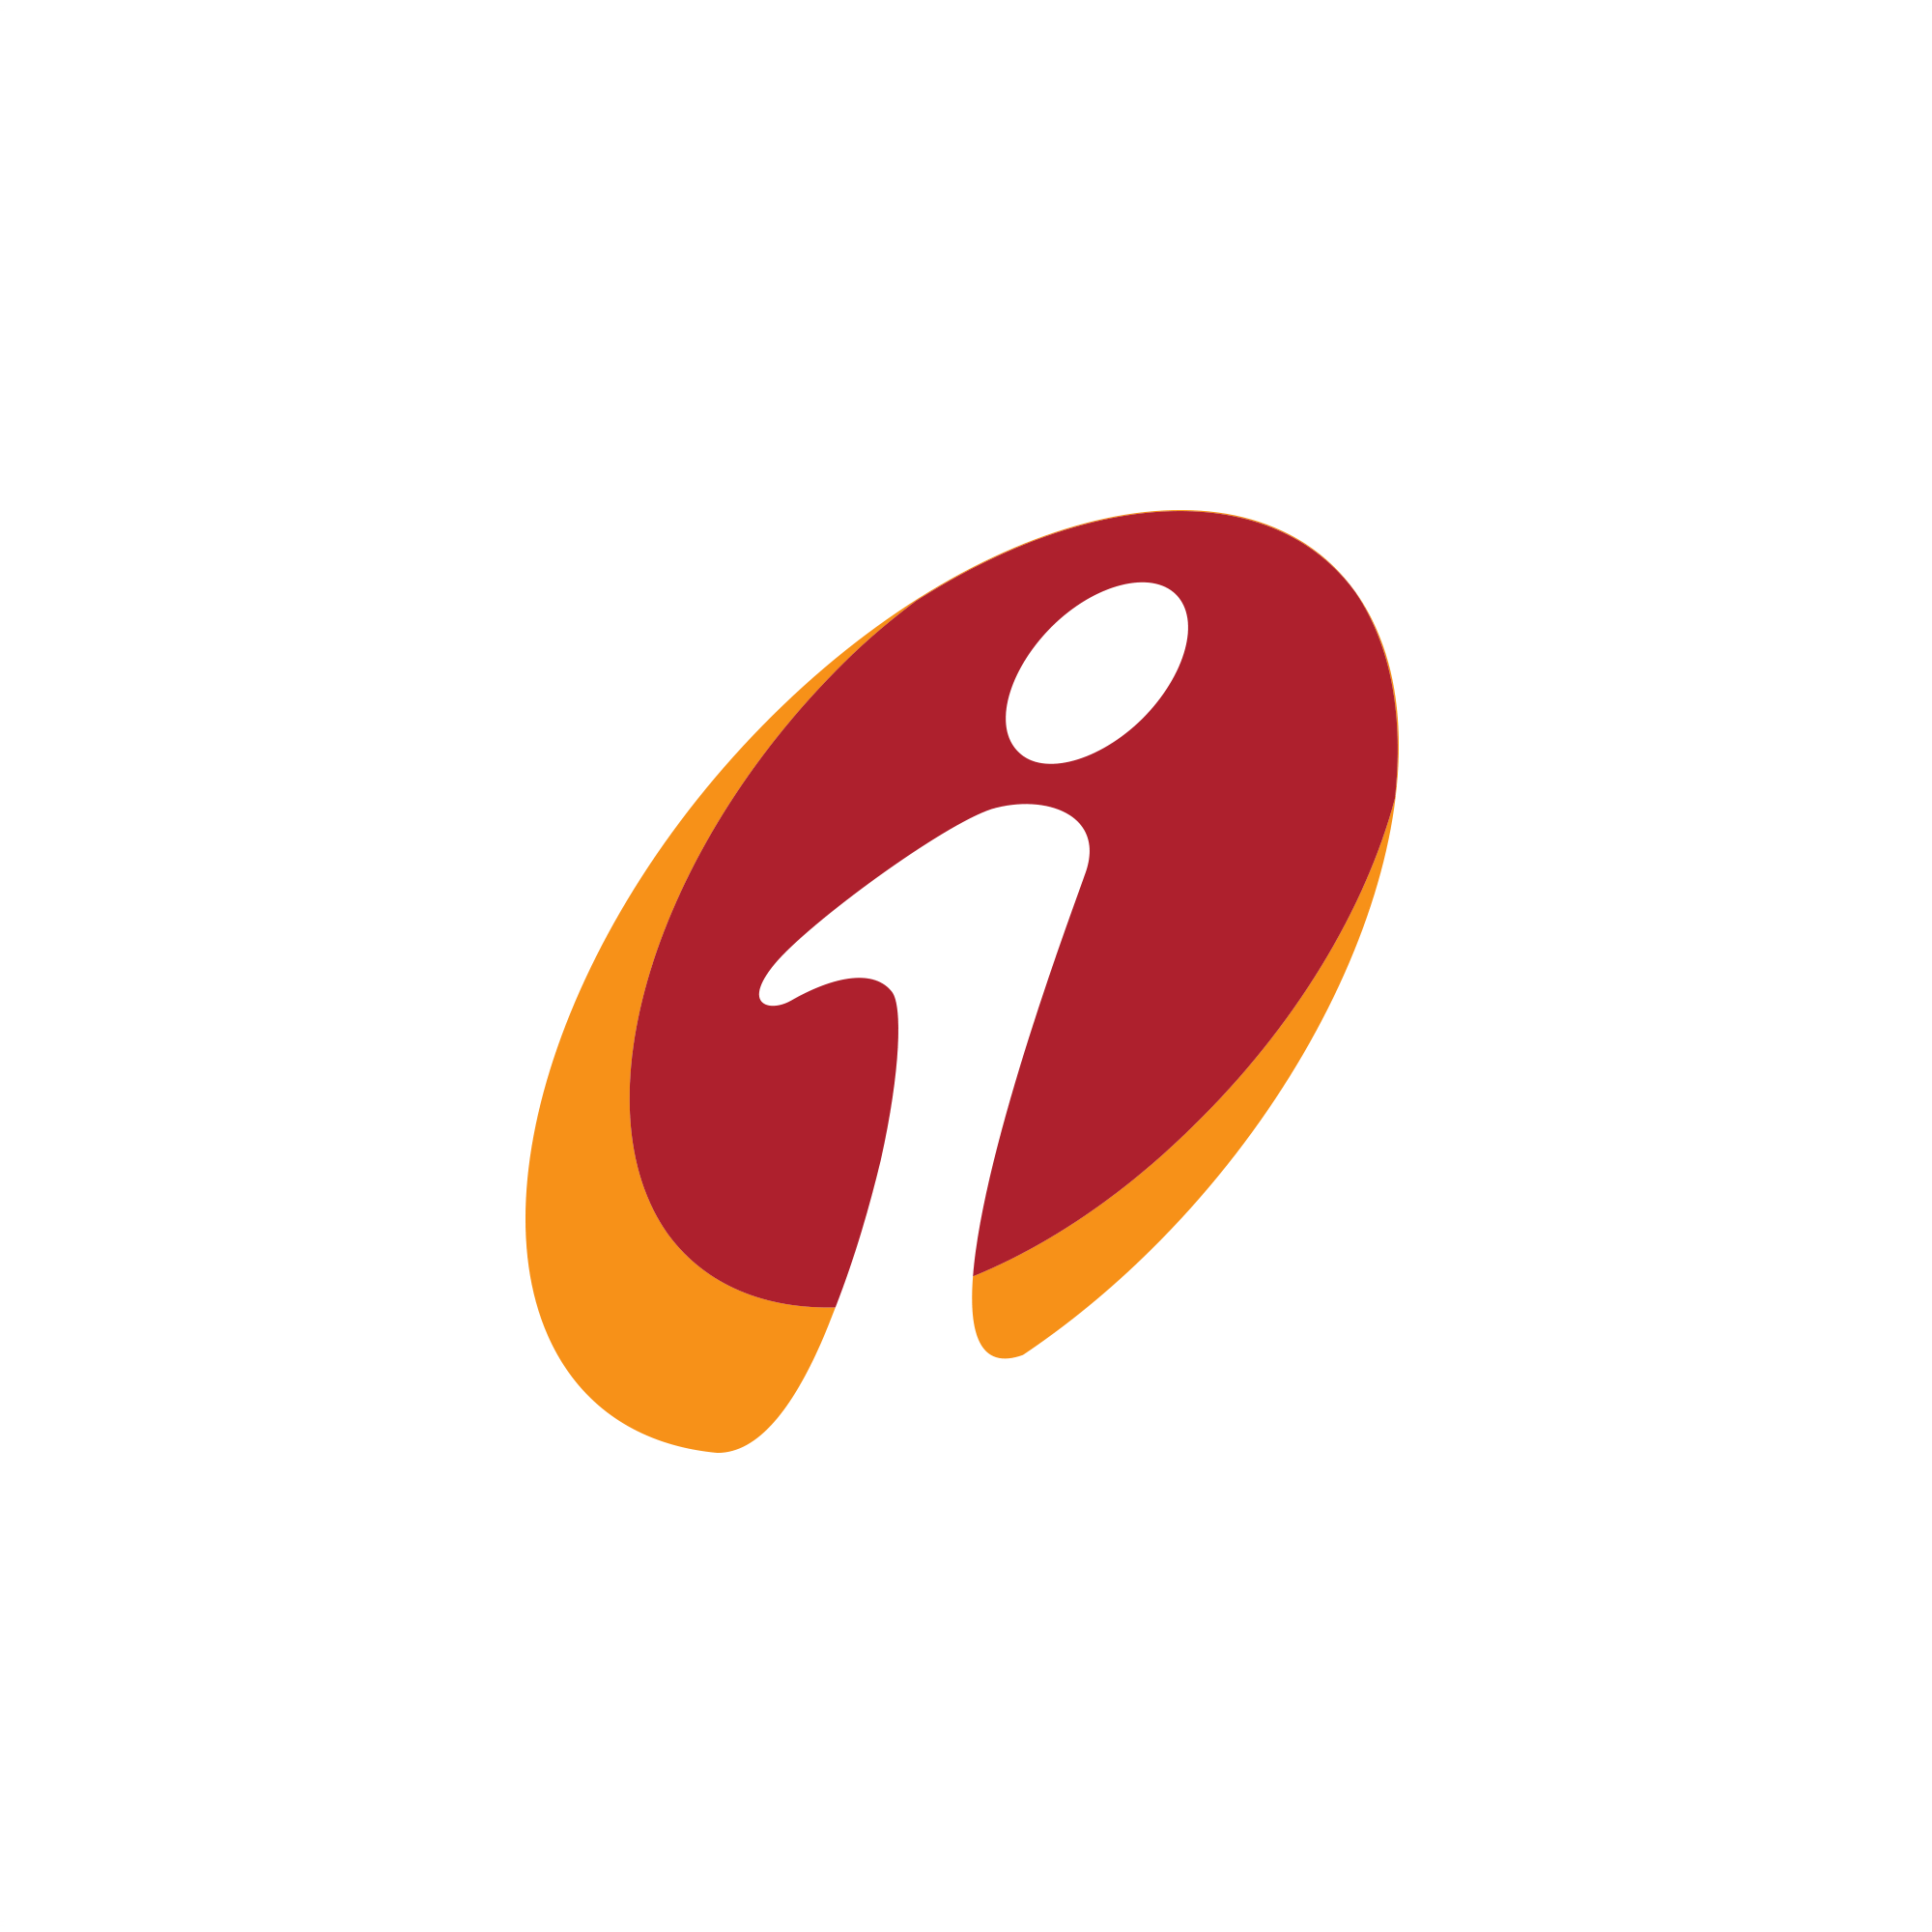 ICICI Bank Logo - ICICI Bank Logo. Real Company